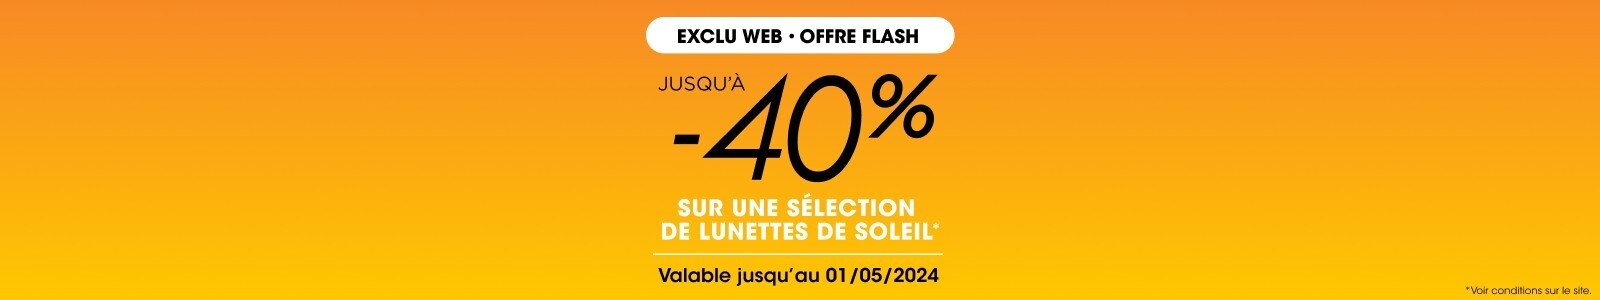 Exclu web -offre flash